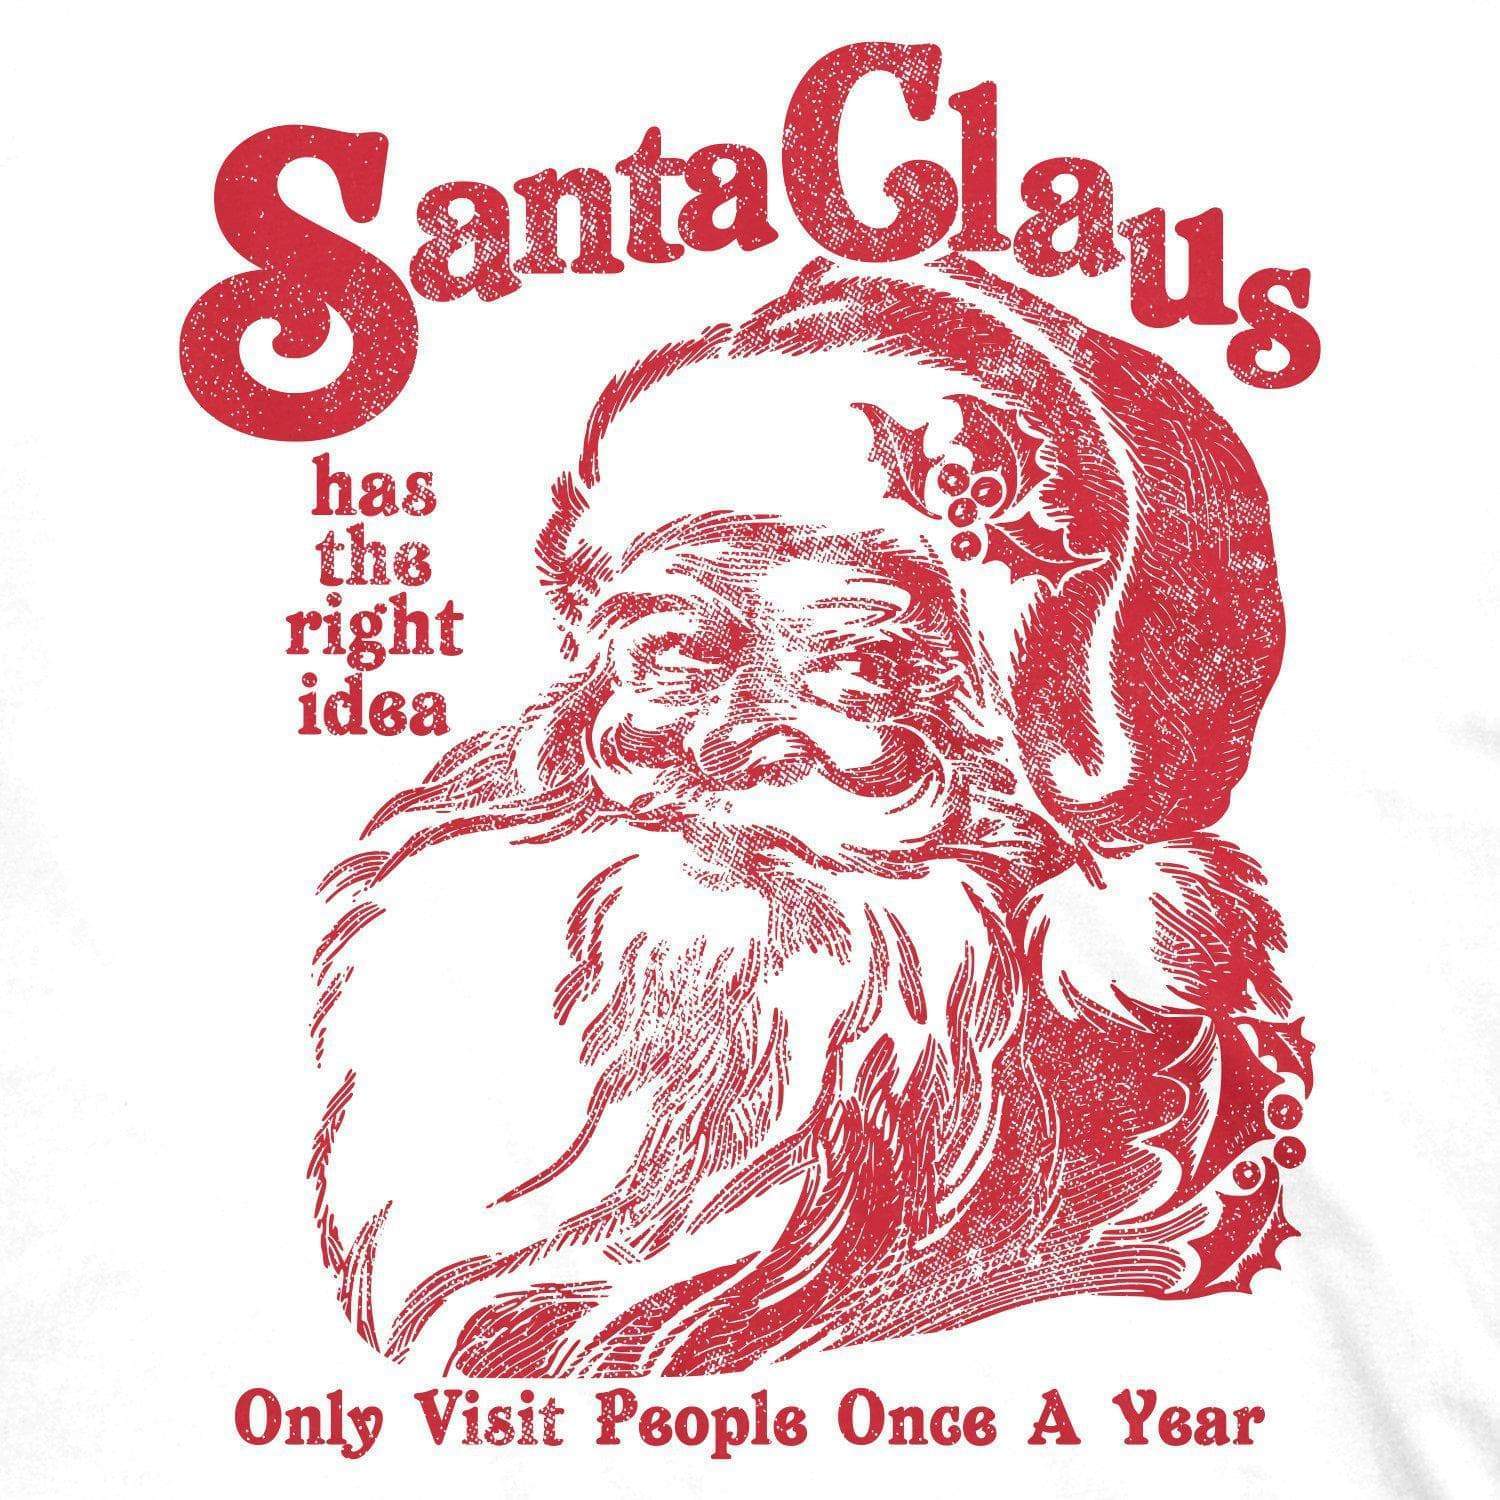 Santa Claus Has The Right Idea Men's Tshirt - Crazy Dog T-Shirts